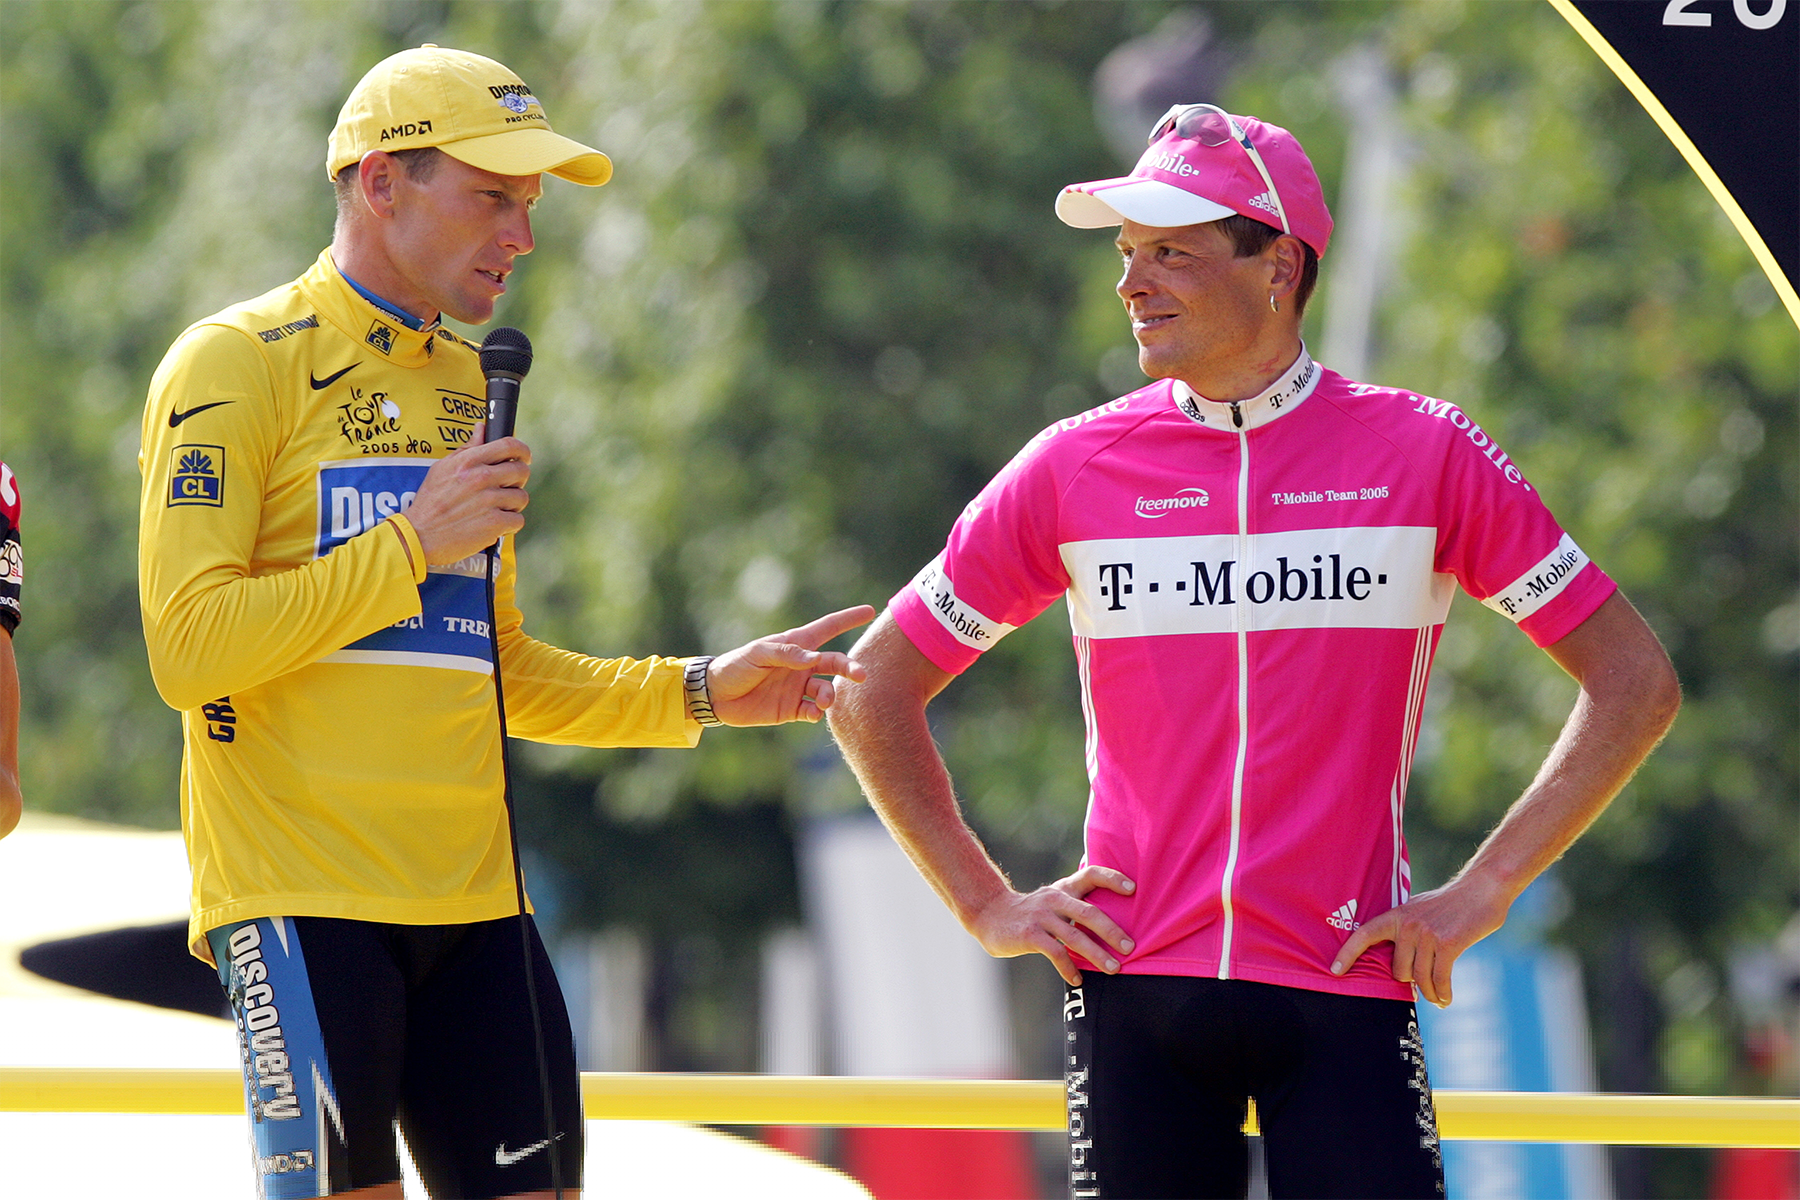 Lance Armstrong, Jan Ullrich